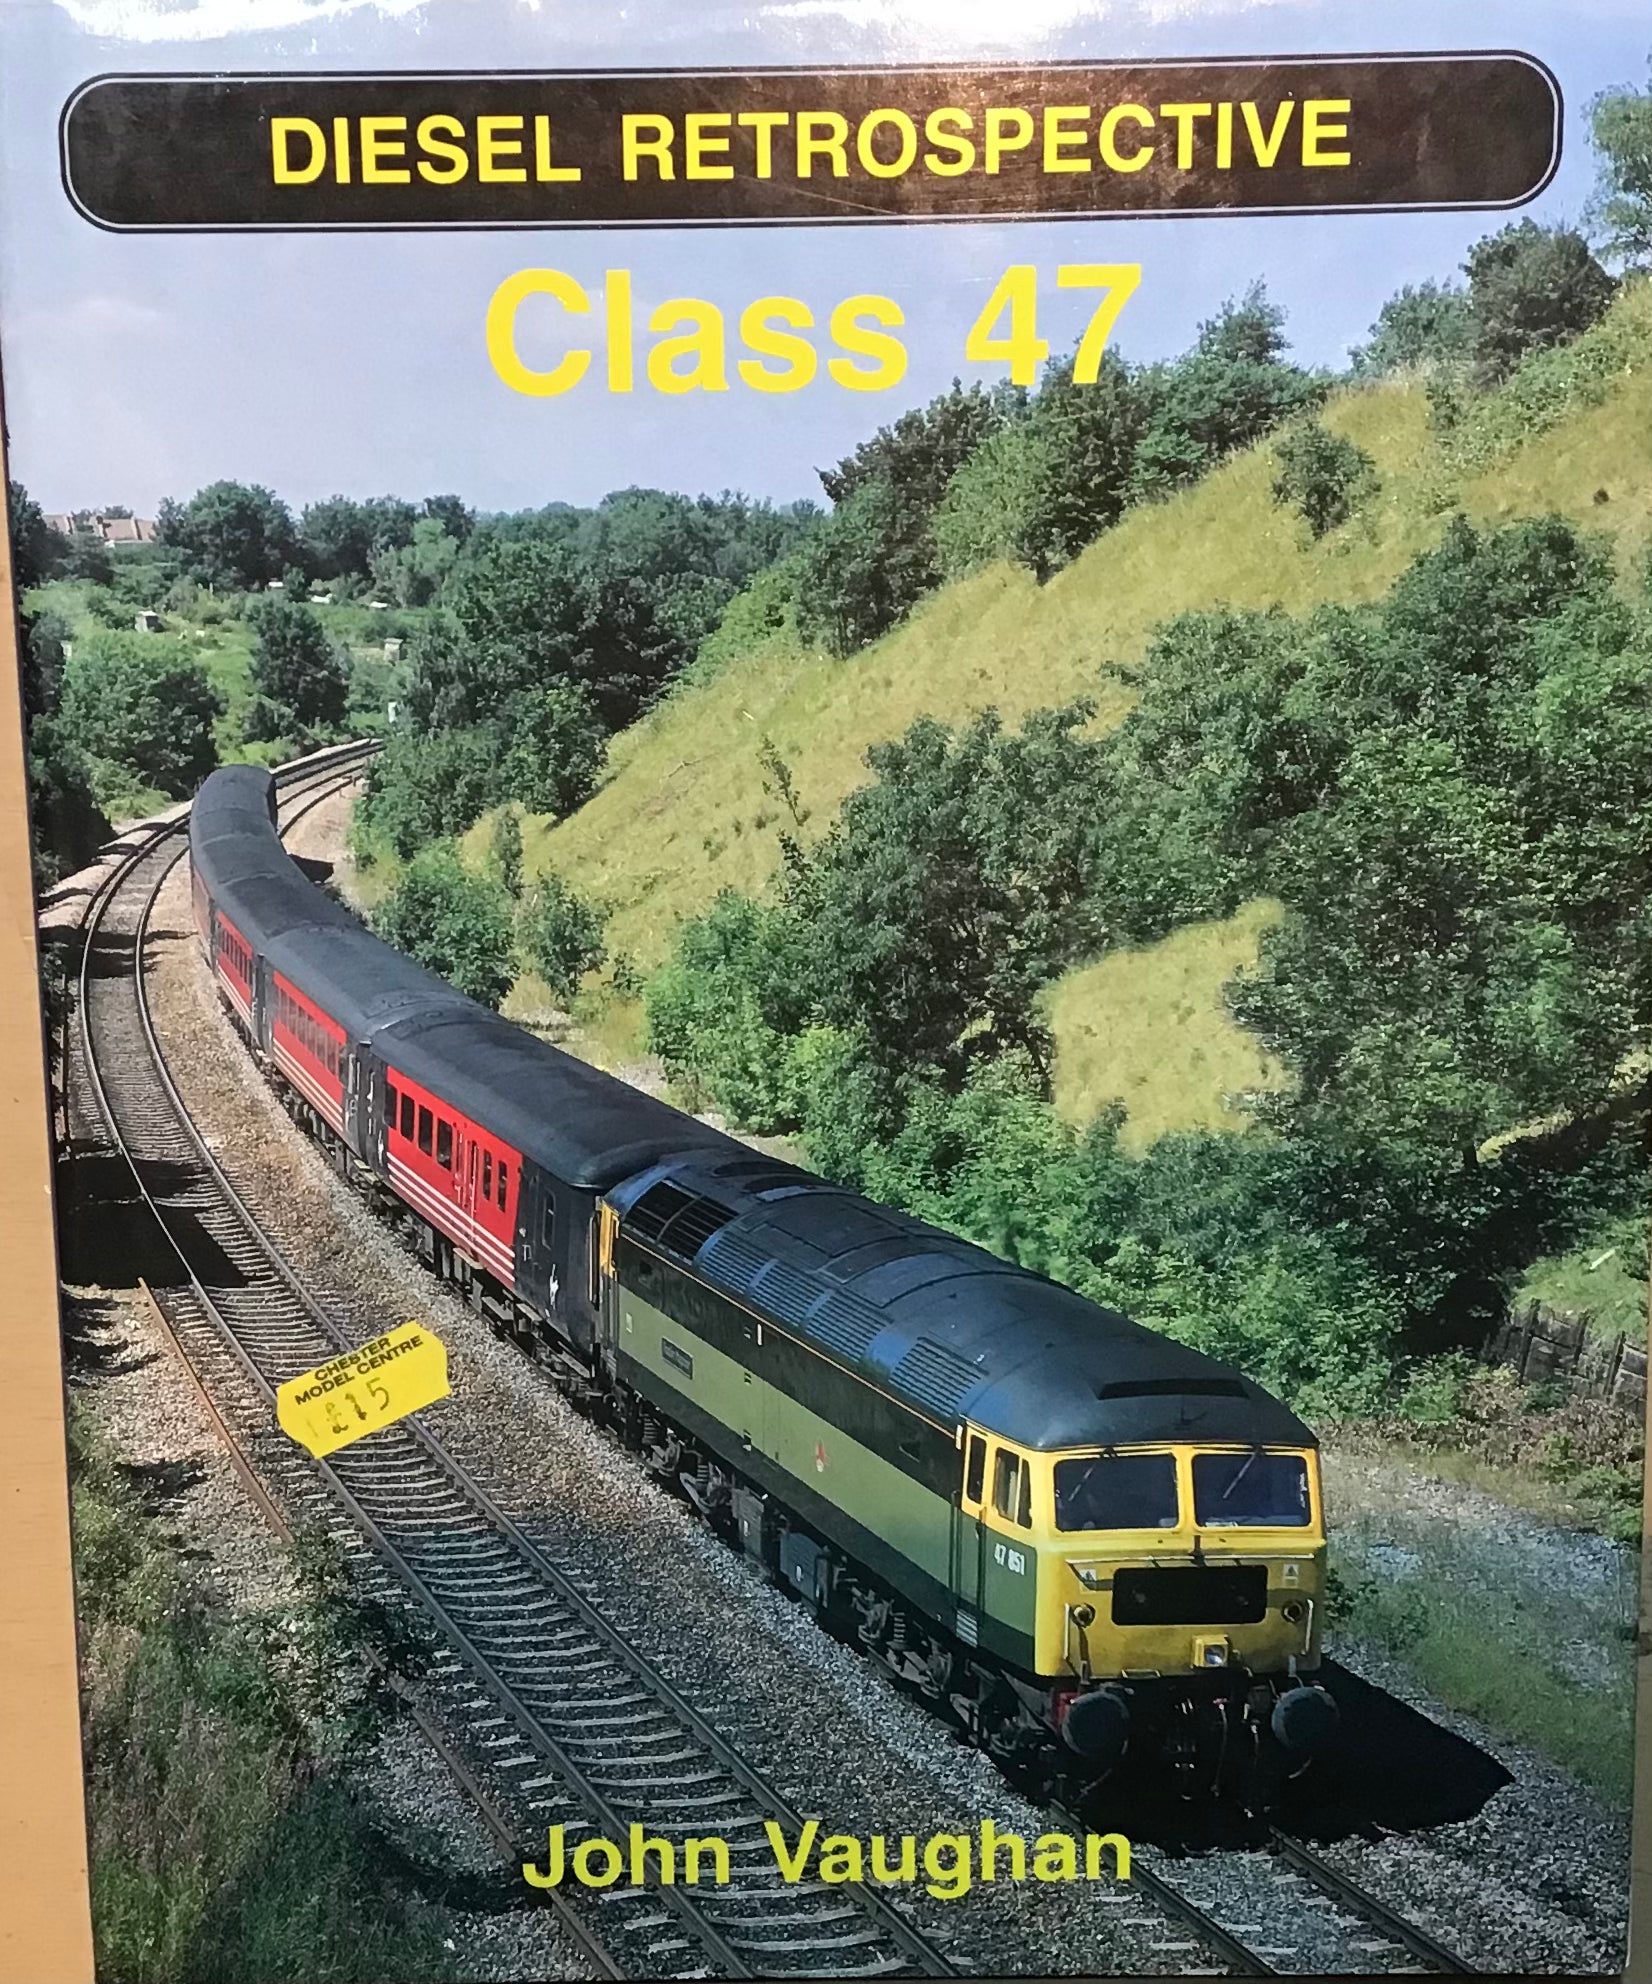 Diesel Retrospective Class 47 by John Vaughan - Chester Model Centre